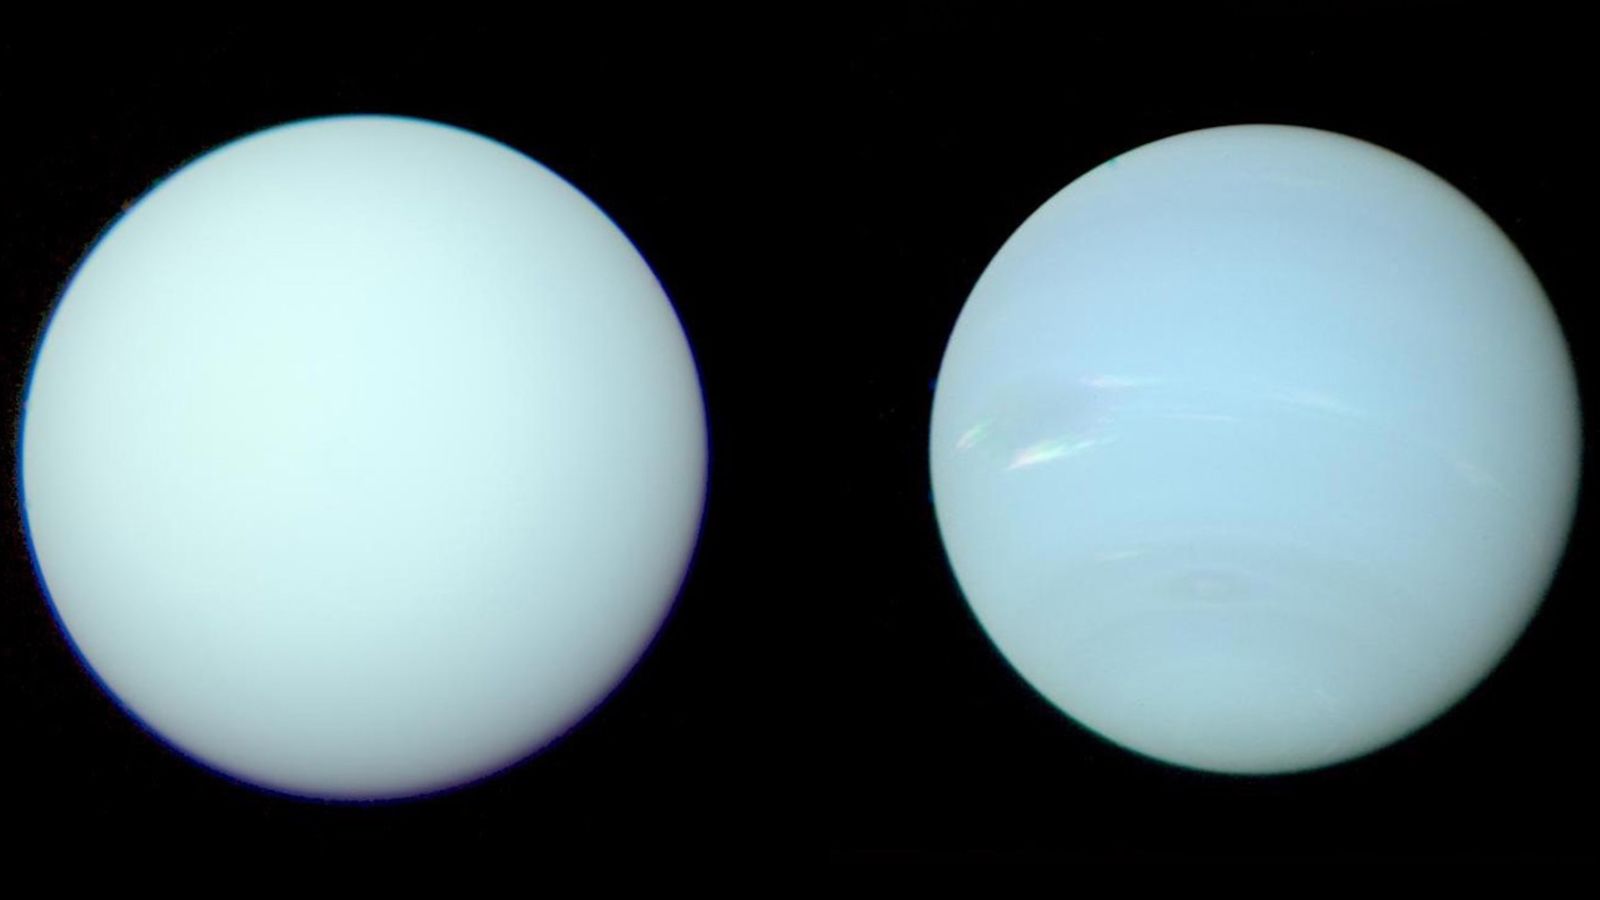 Researchers reveal true-color images of Uranus and Neptune